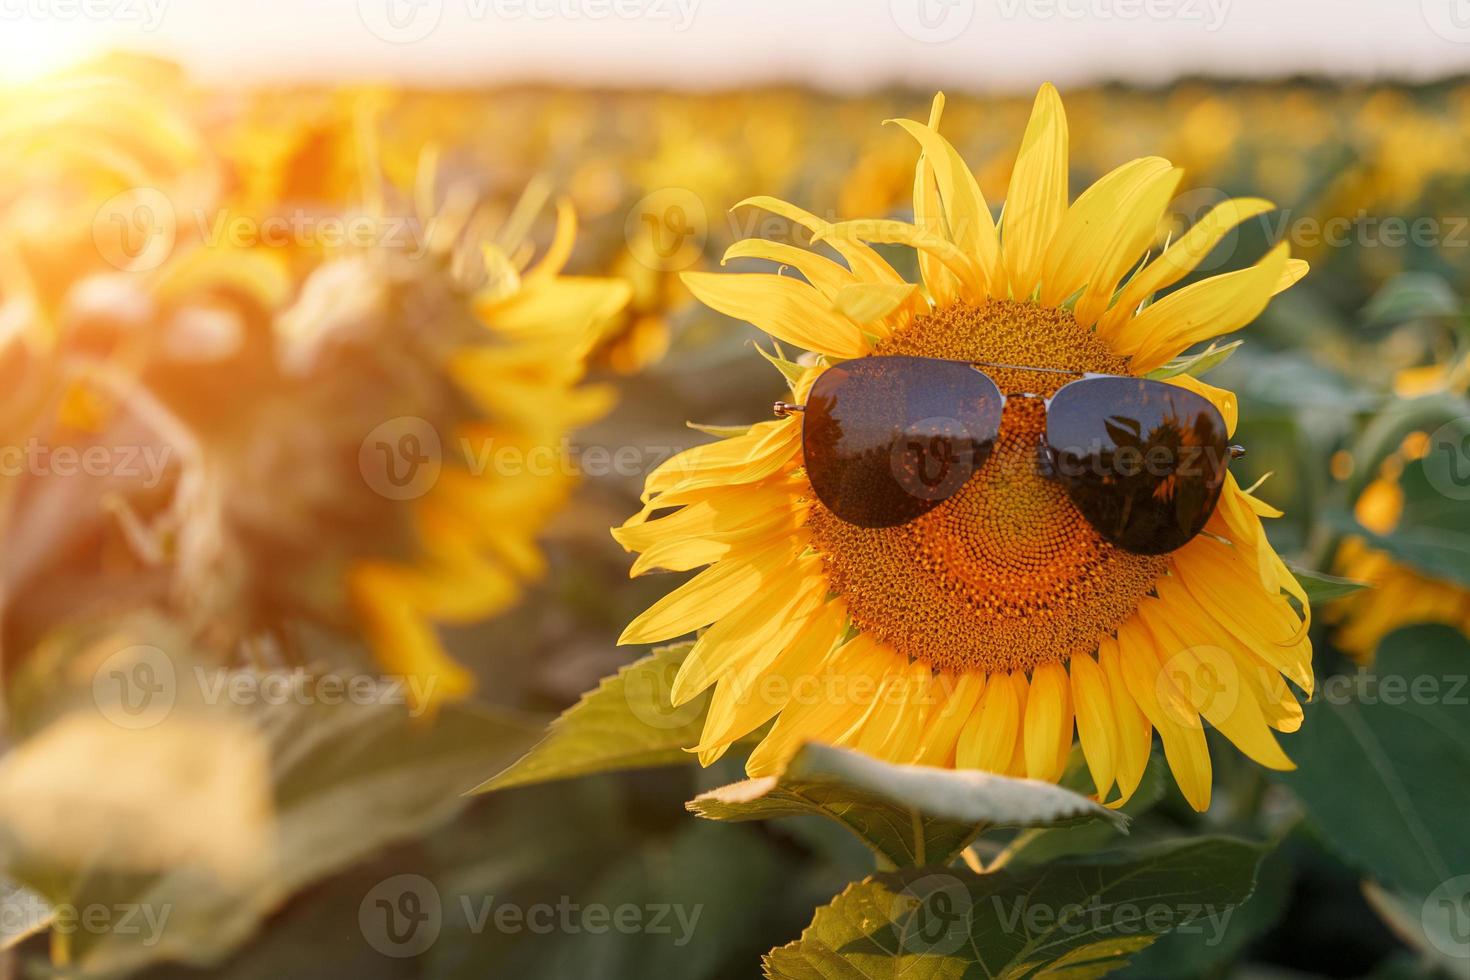 Sunflower in black sunglasses against the setting sun. photo